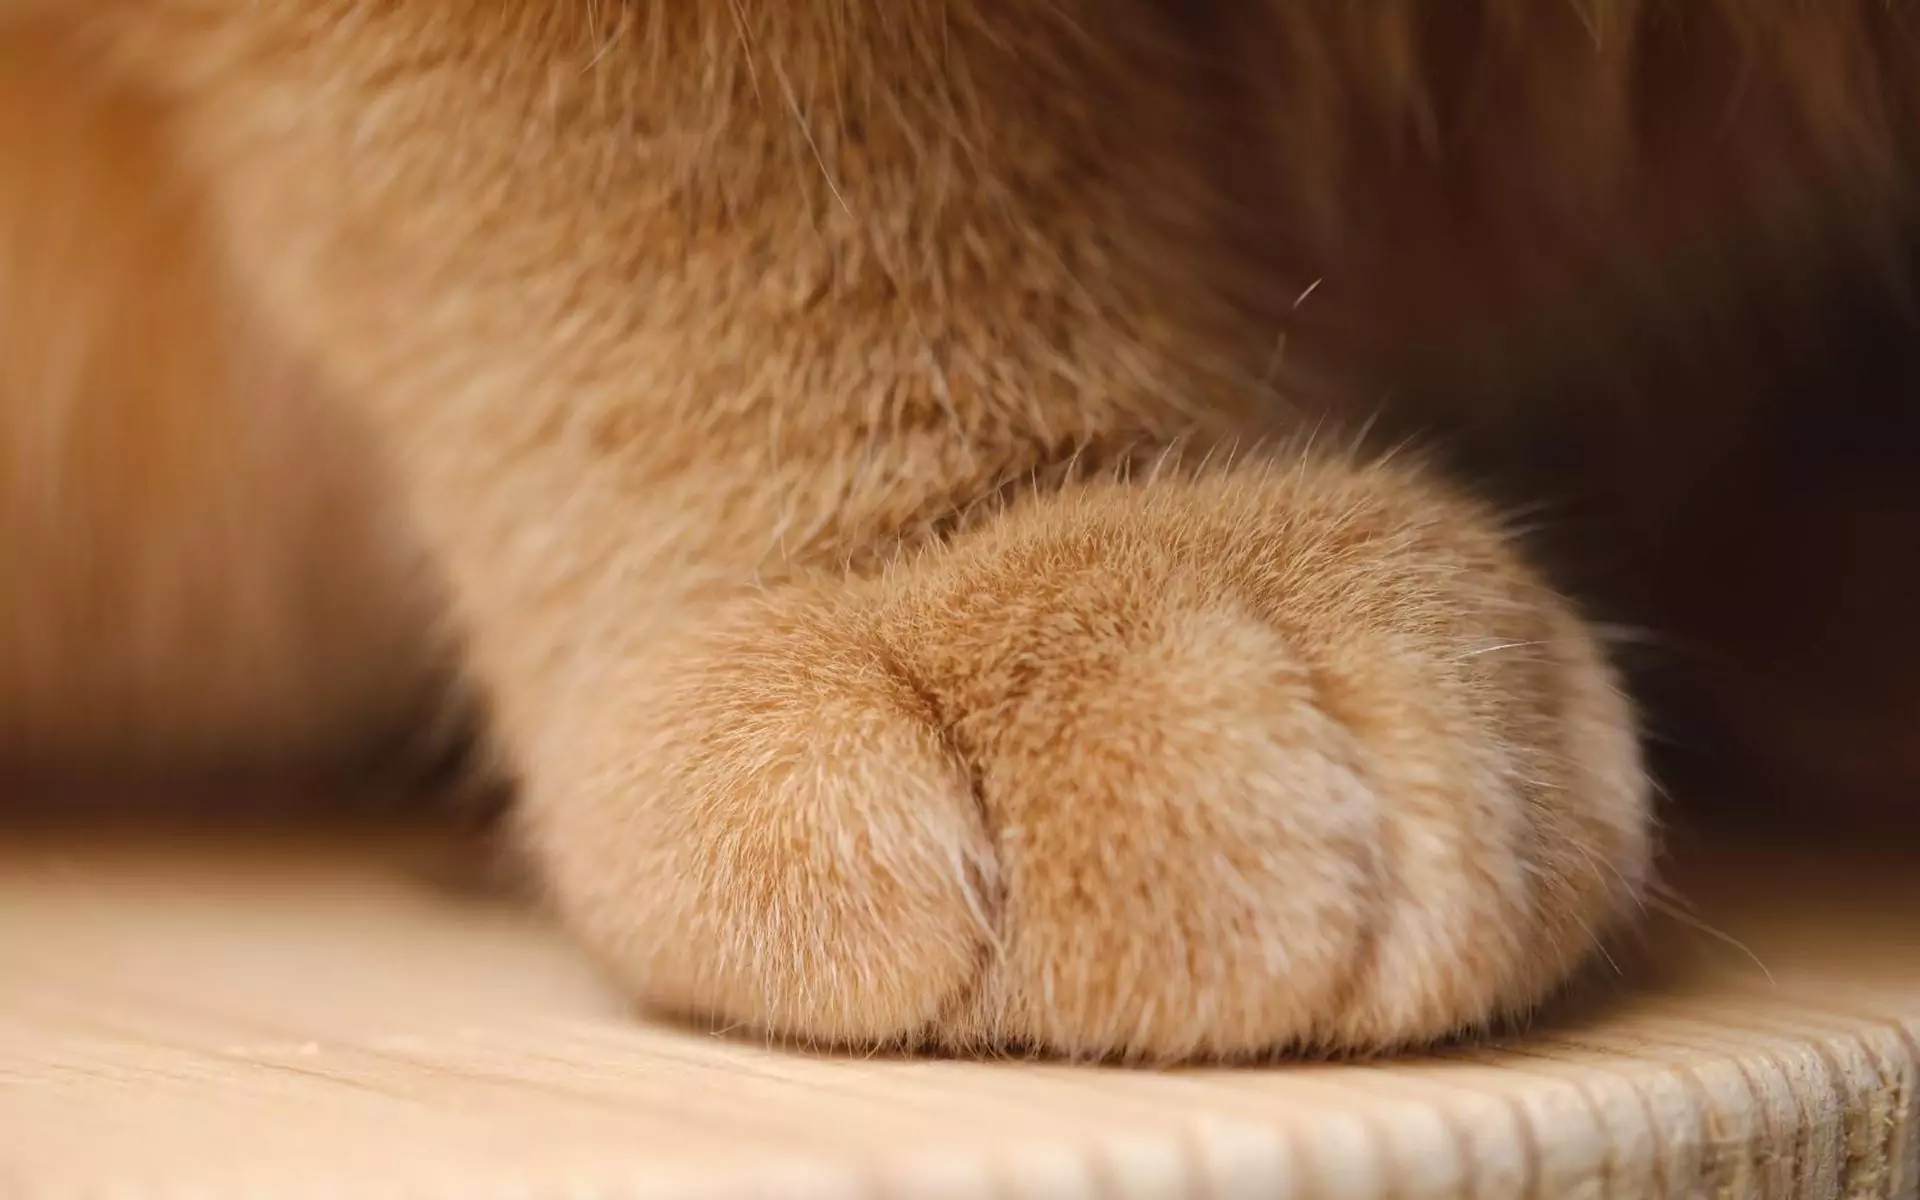 Ile palców u nóg ma kot?